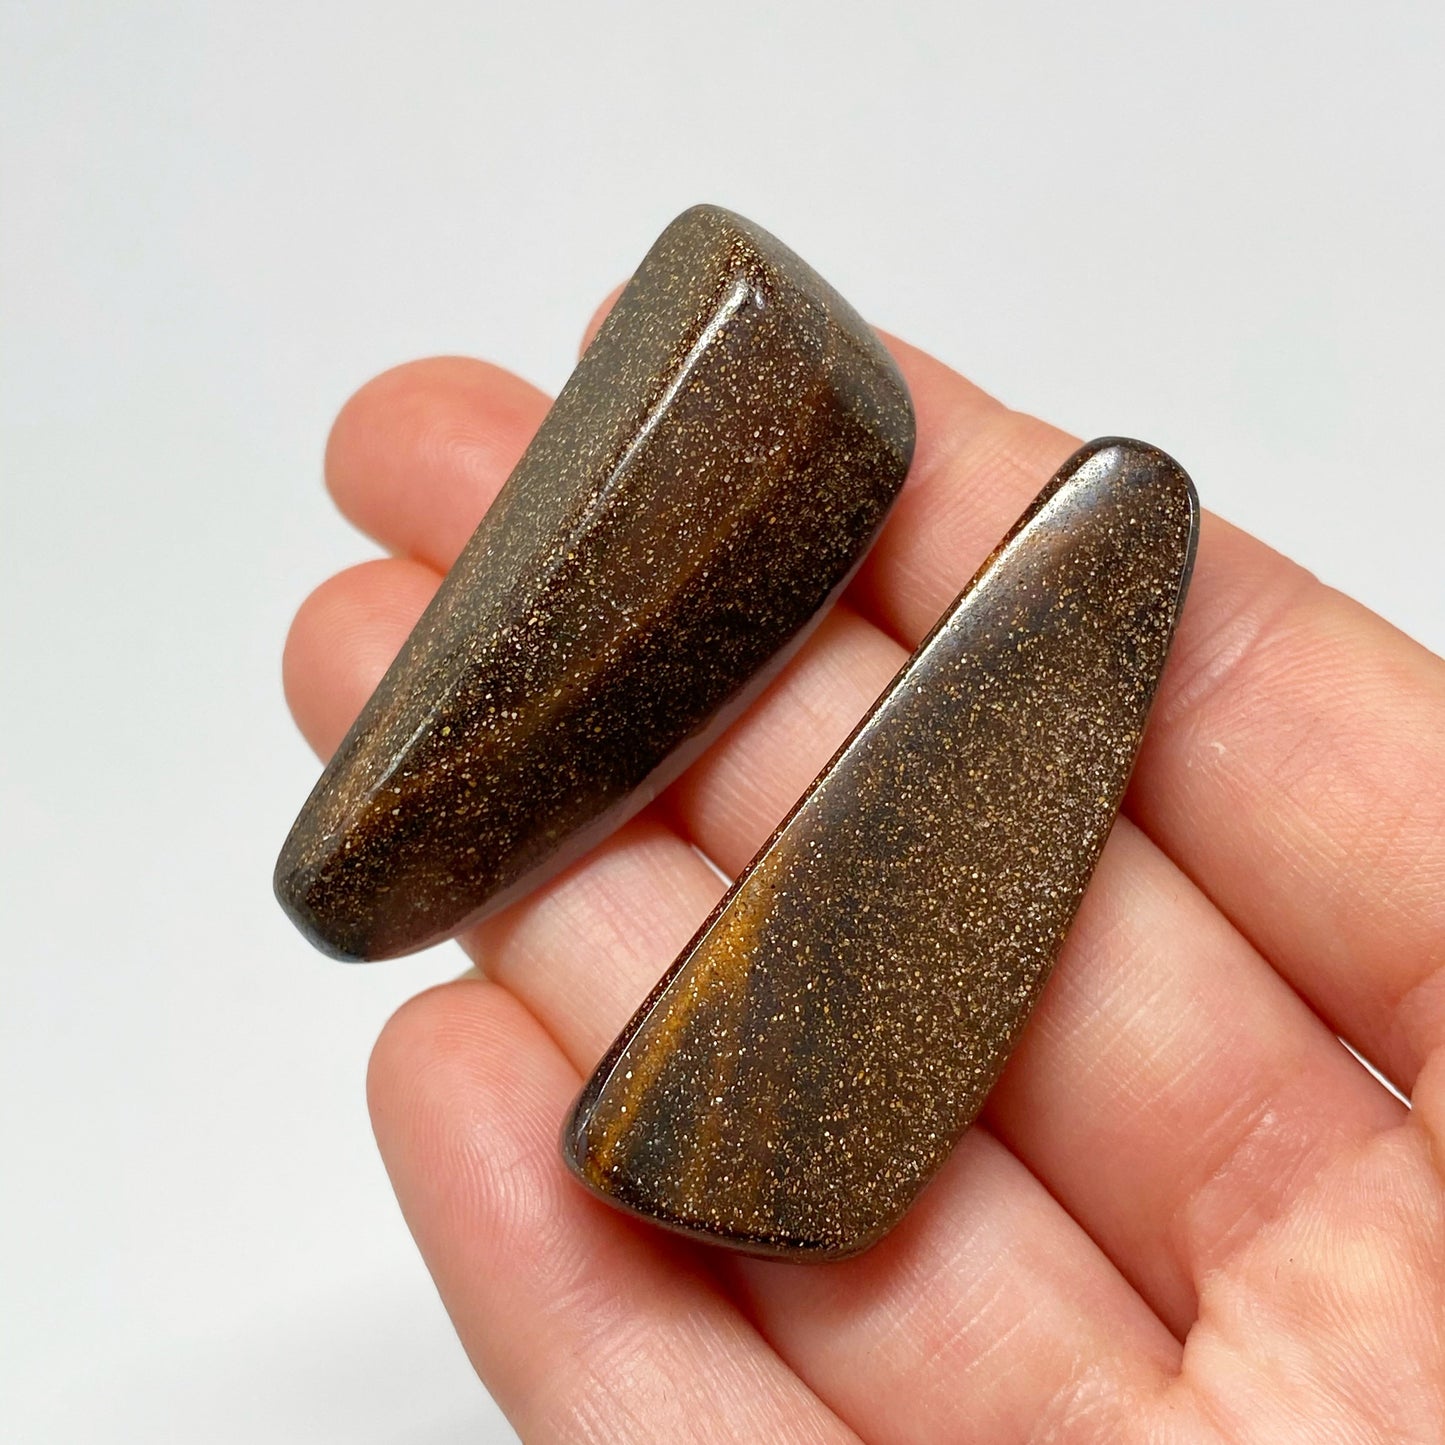 Australian Boulder Opal - 136 Ct small pastel boulder opal 'split' specimen pair - Broken River Mining